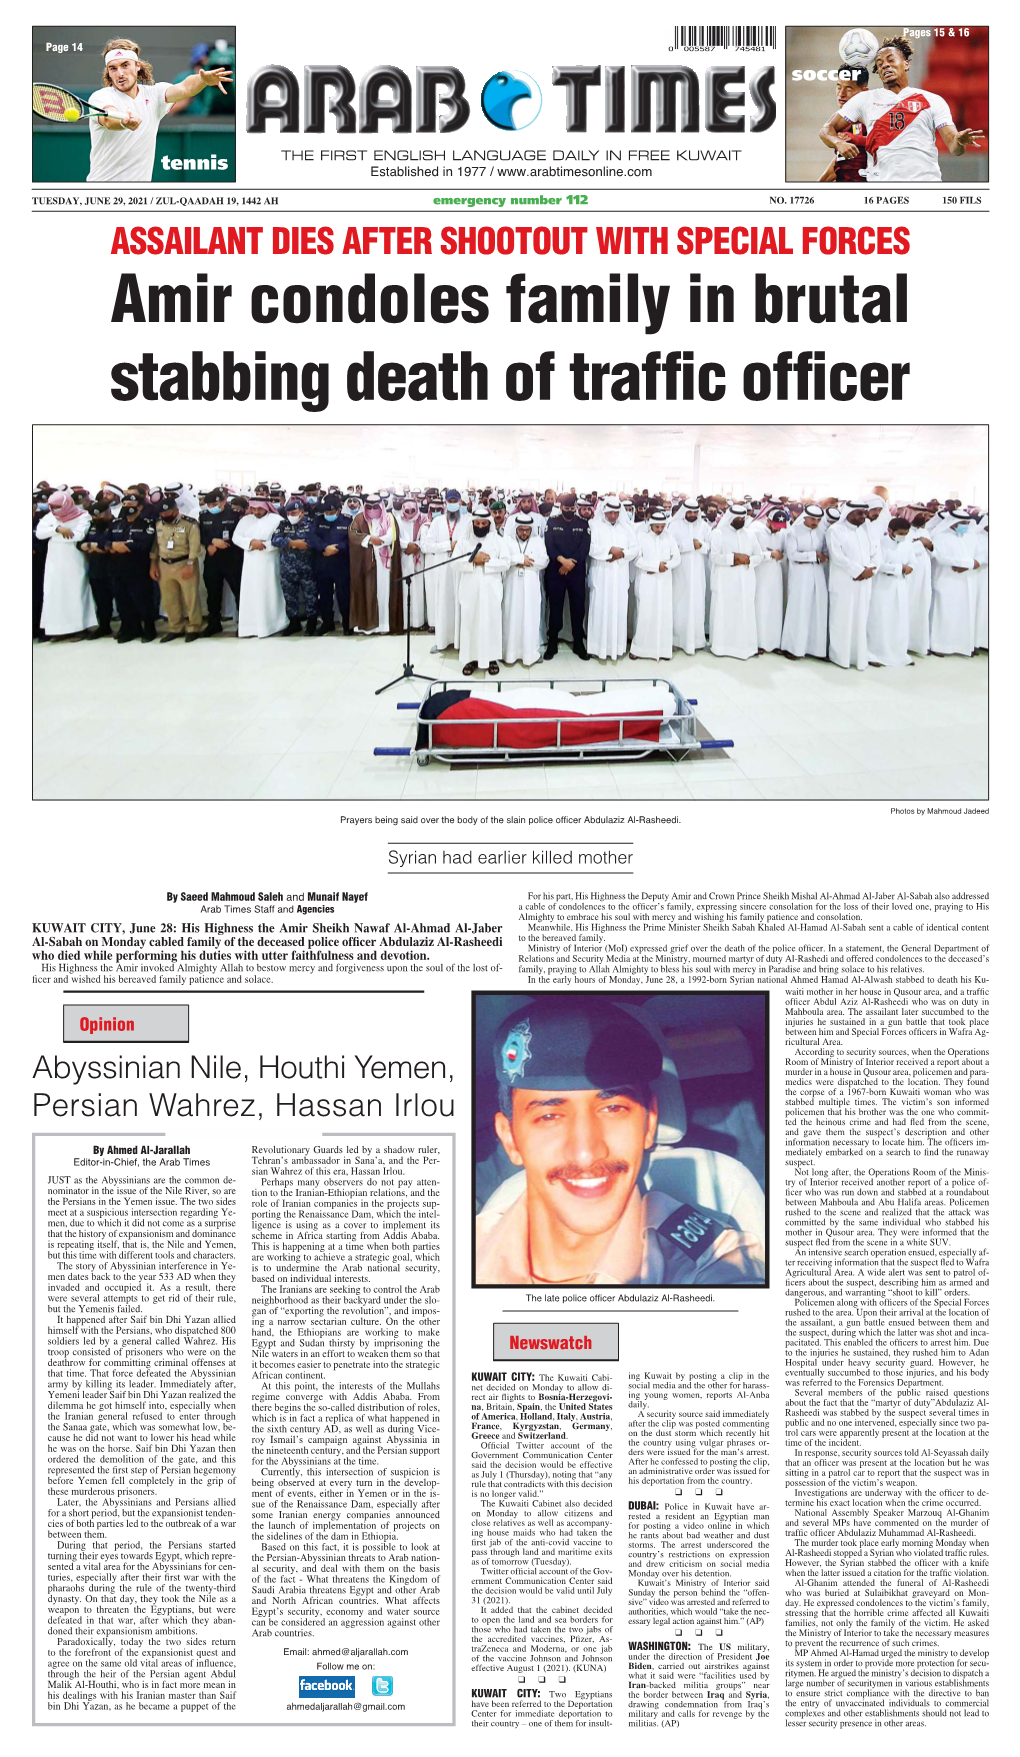 Amir Condoles Family in Brutal Stabbing Death of Traffic Officer